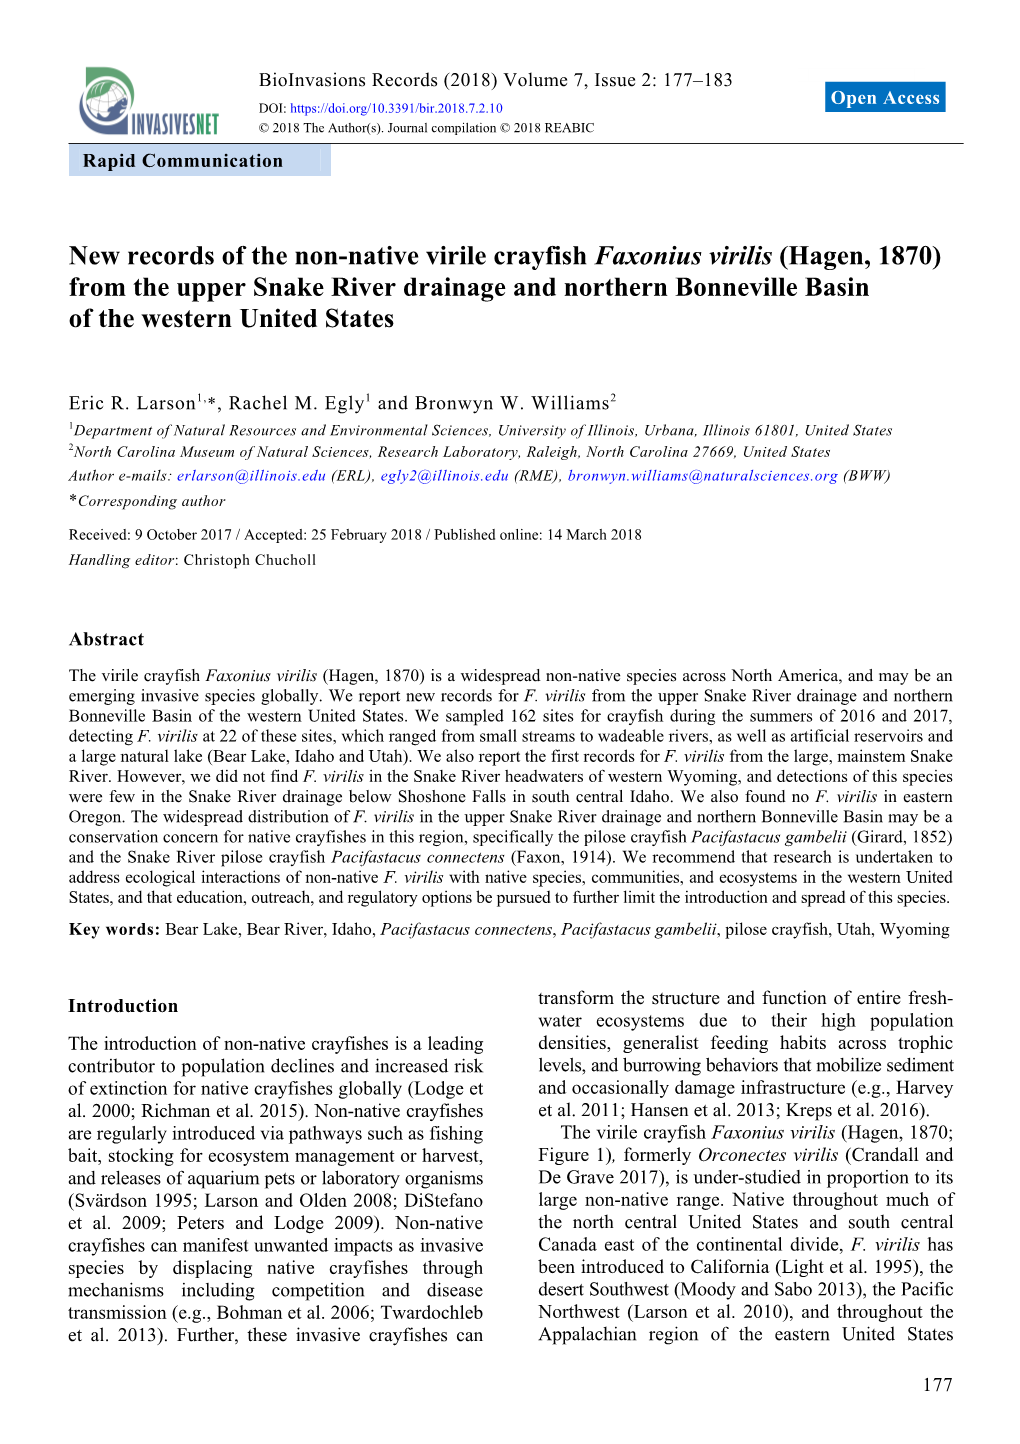 New Records of the Non-Native Virile Crayfish Faxonius Virilis